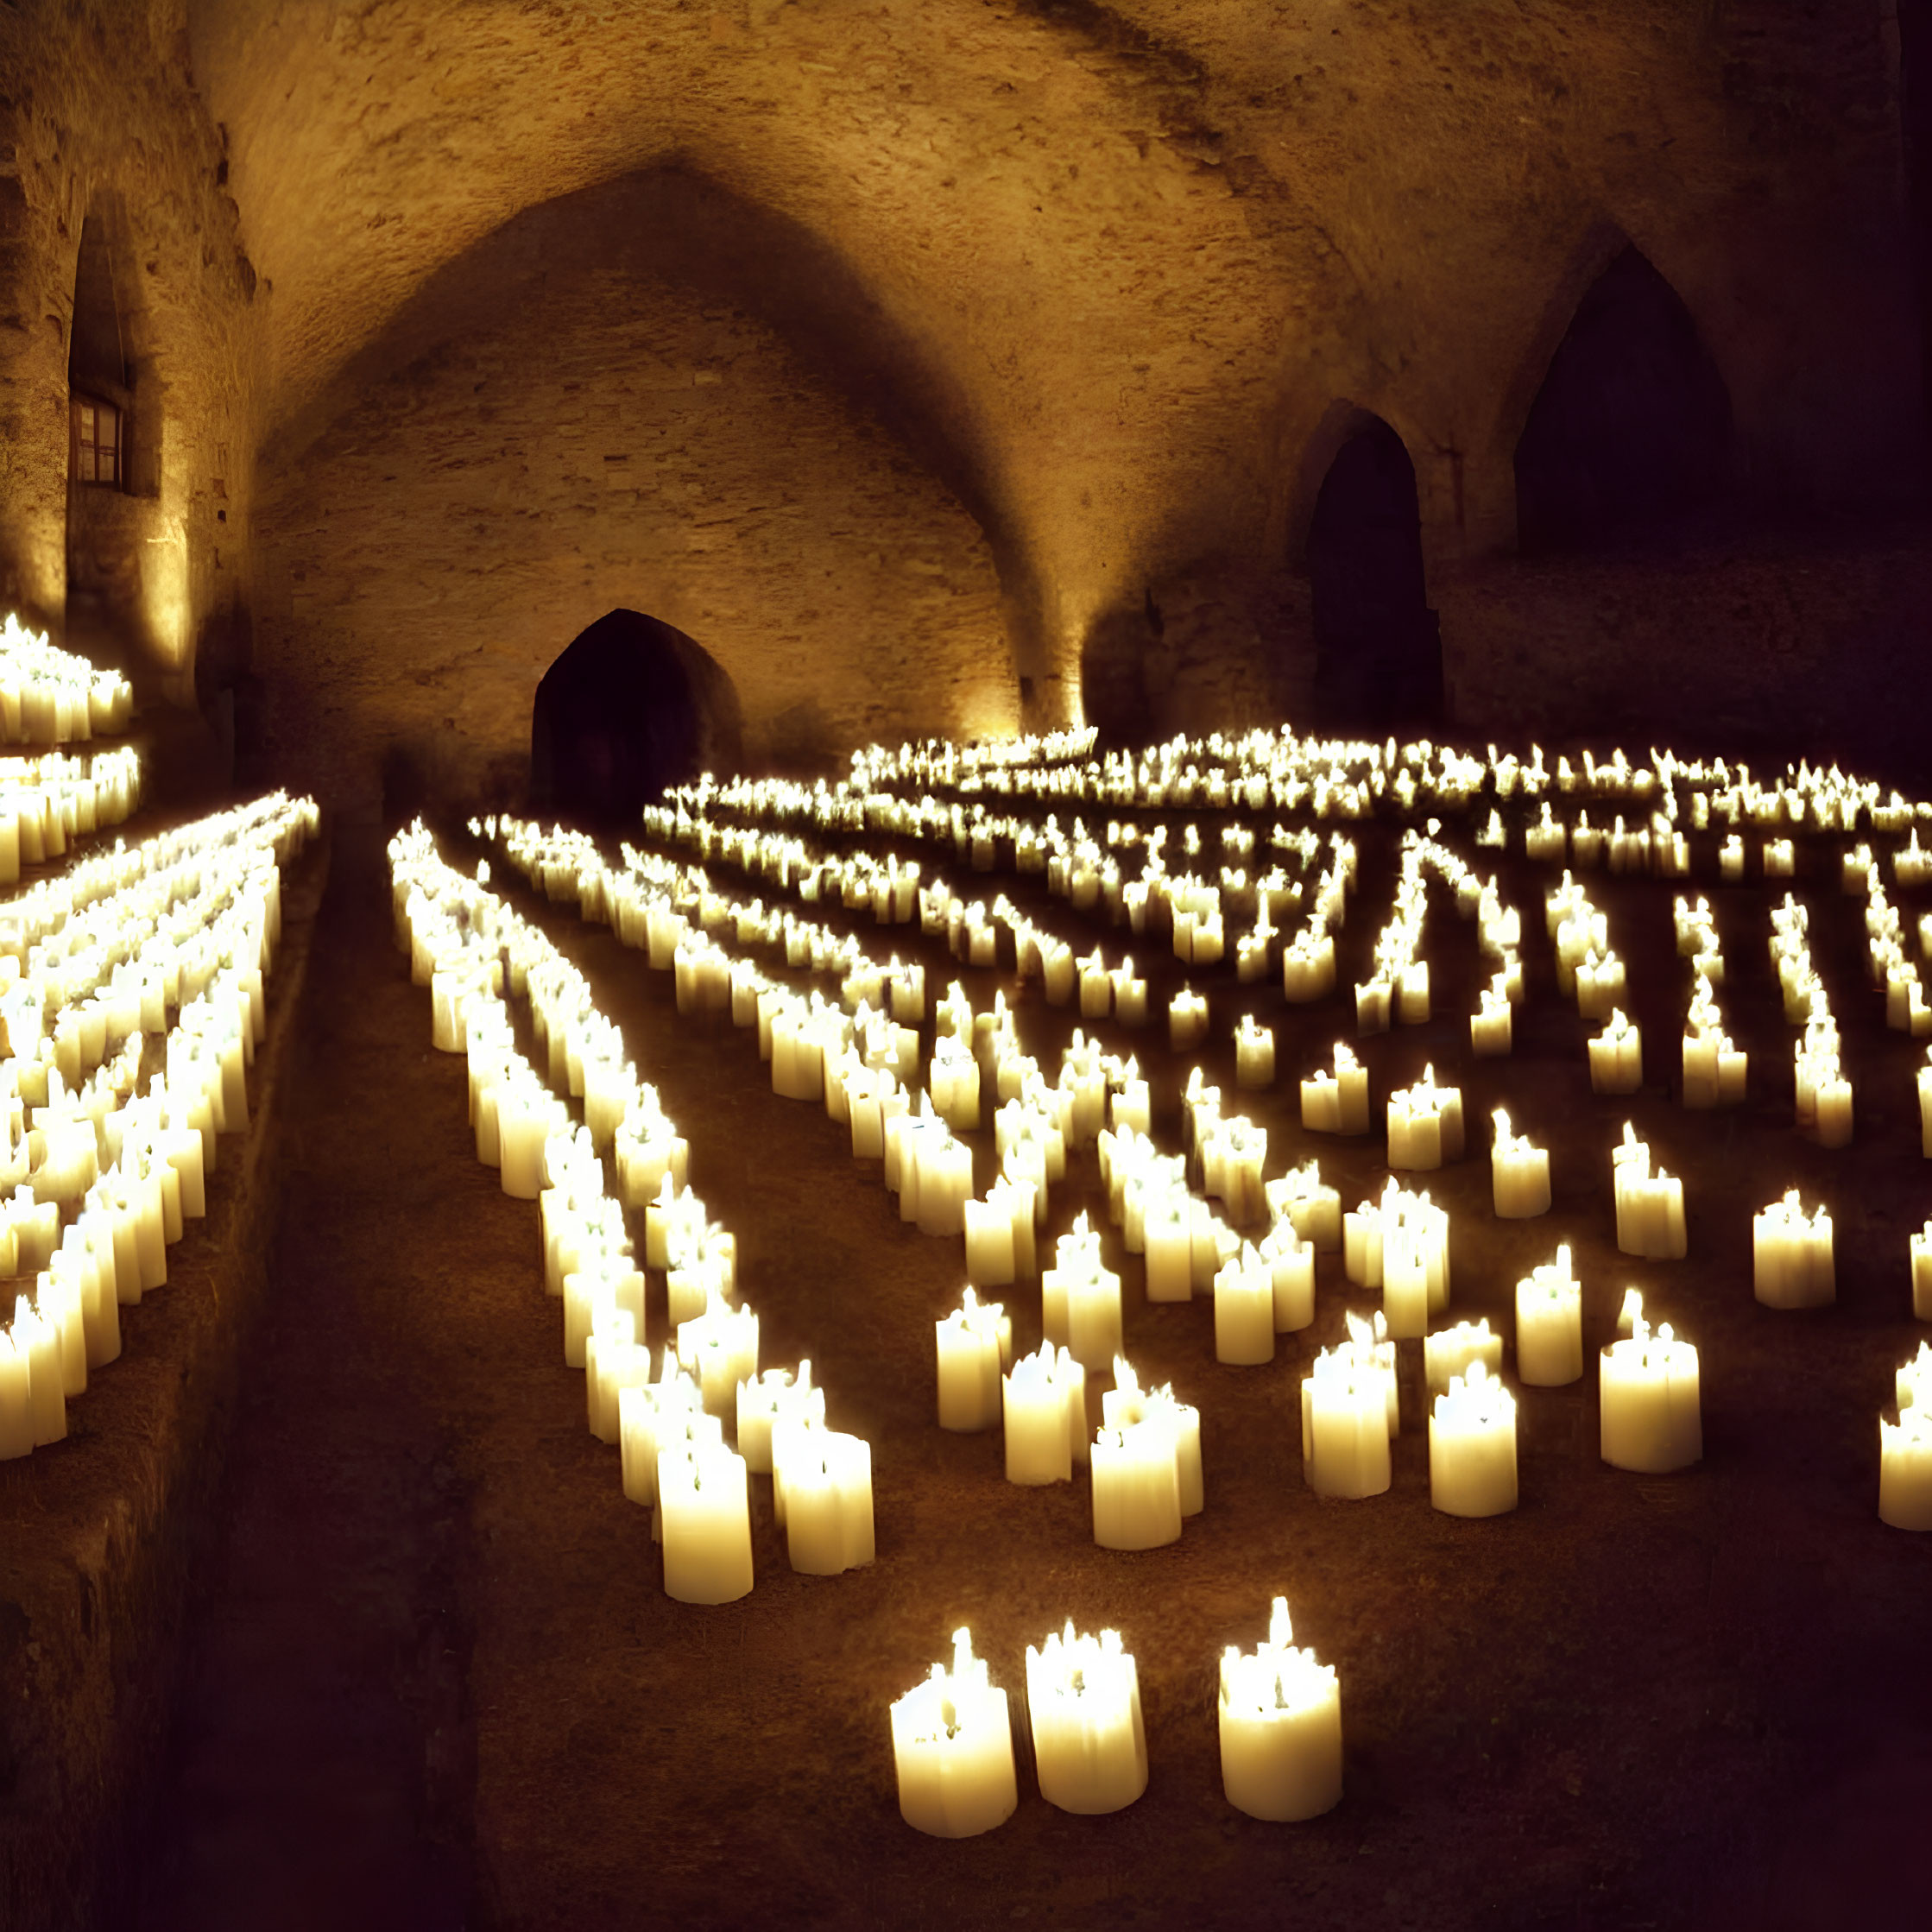 Numerous Candles Illuminate Stone Underground Room